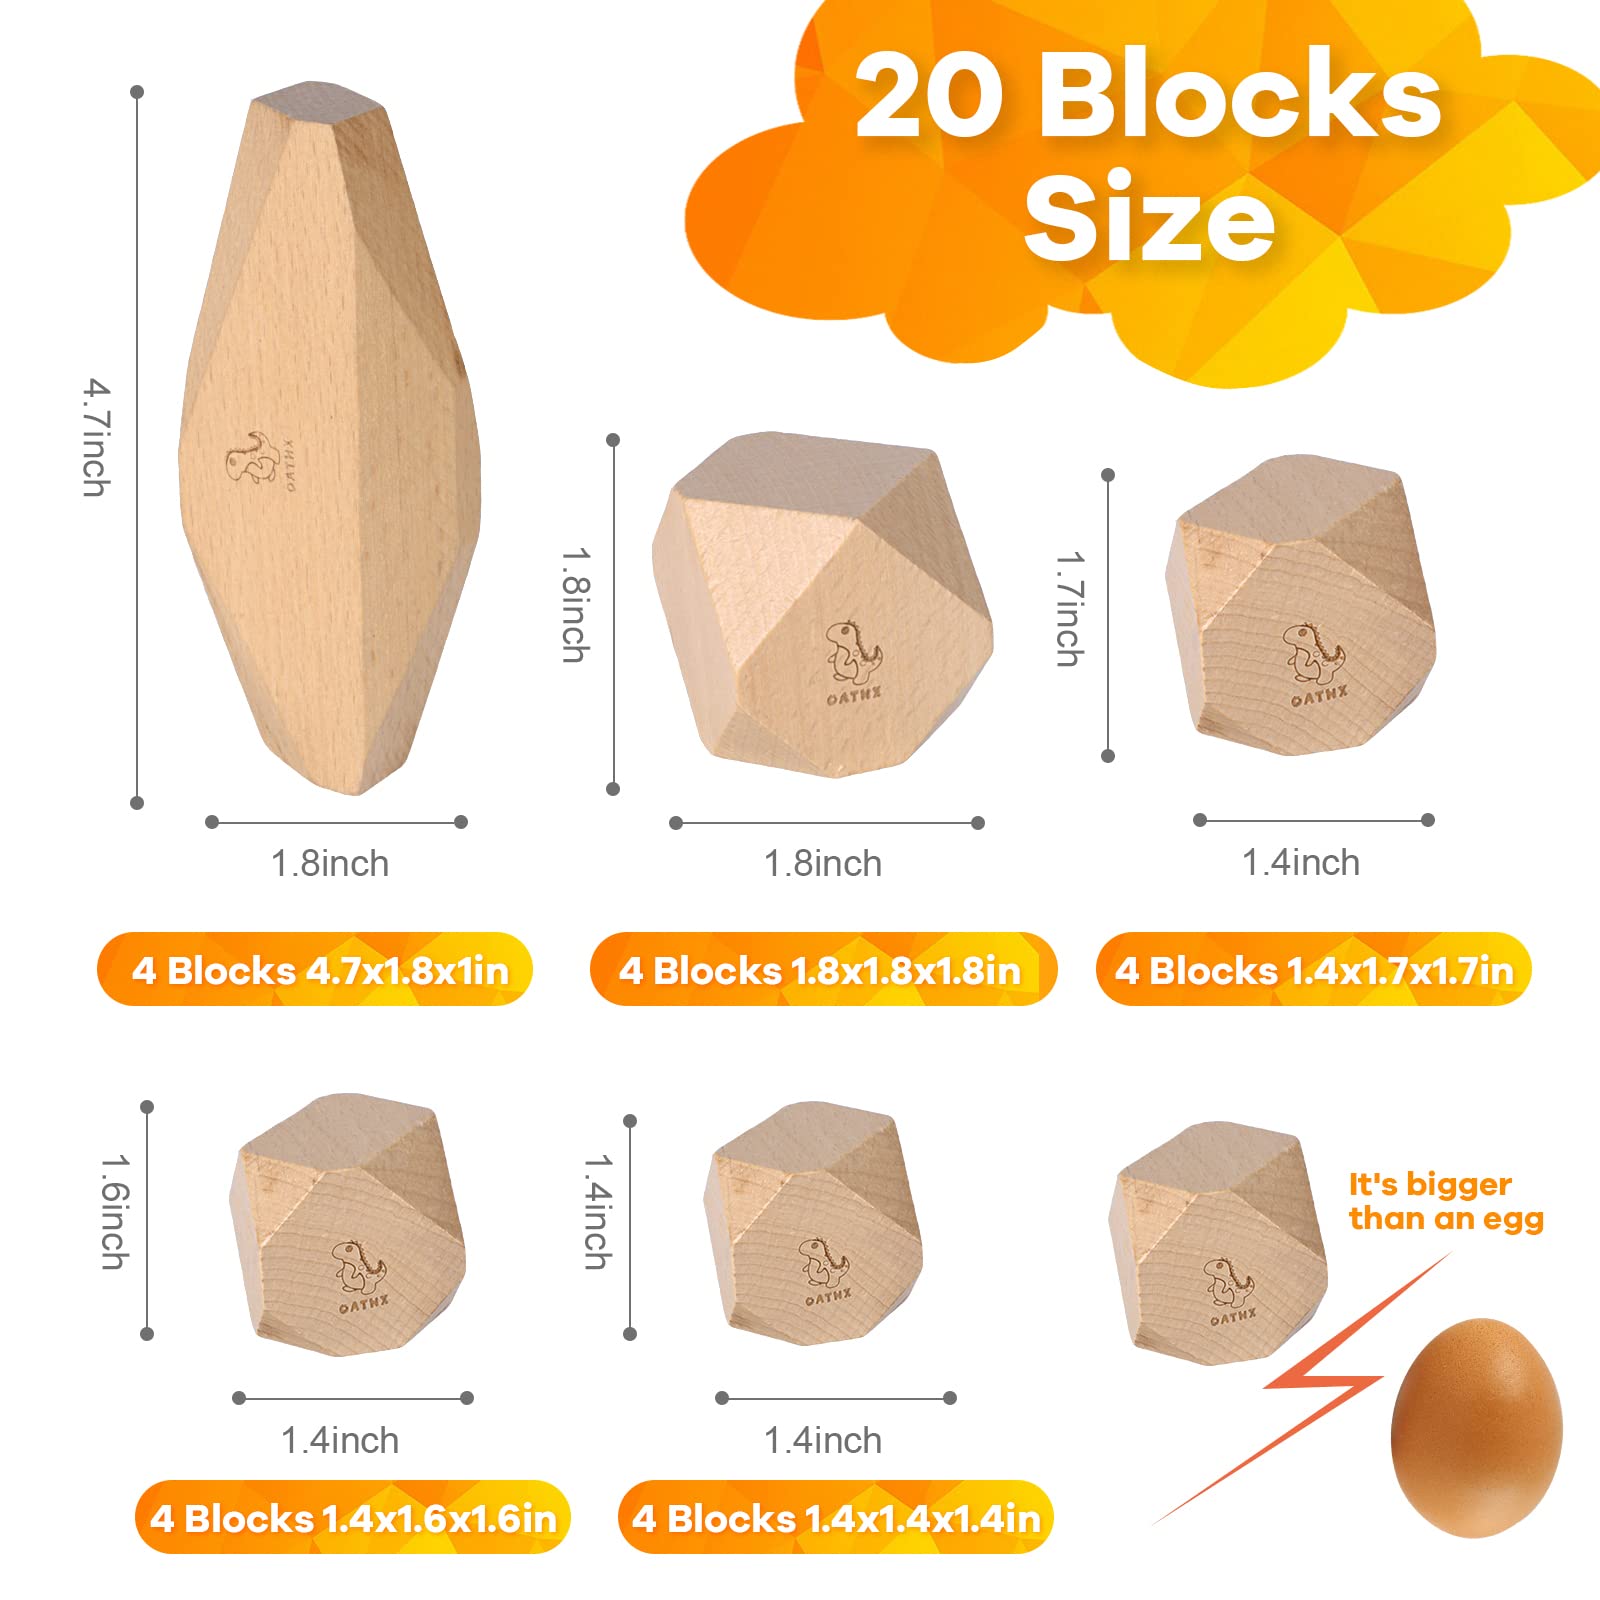 OATHX Montessori Toys Stacking Rocks Wooden Blocks Building Preschool Balancing Stones for Toddlers 1-3 Girls Boys Sensory Natural Wood 20pcs Large Size